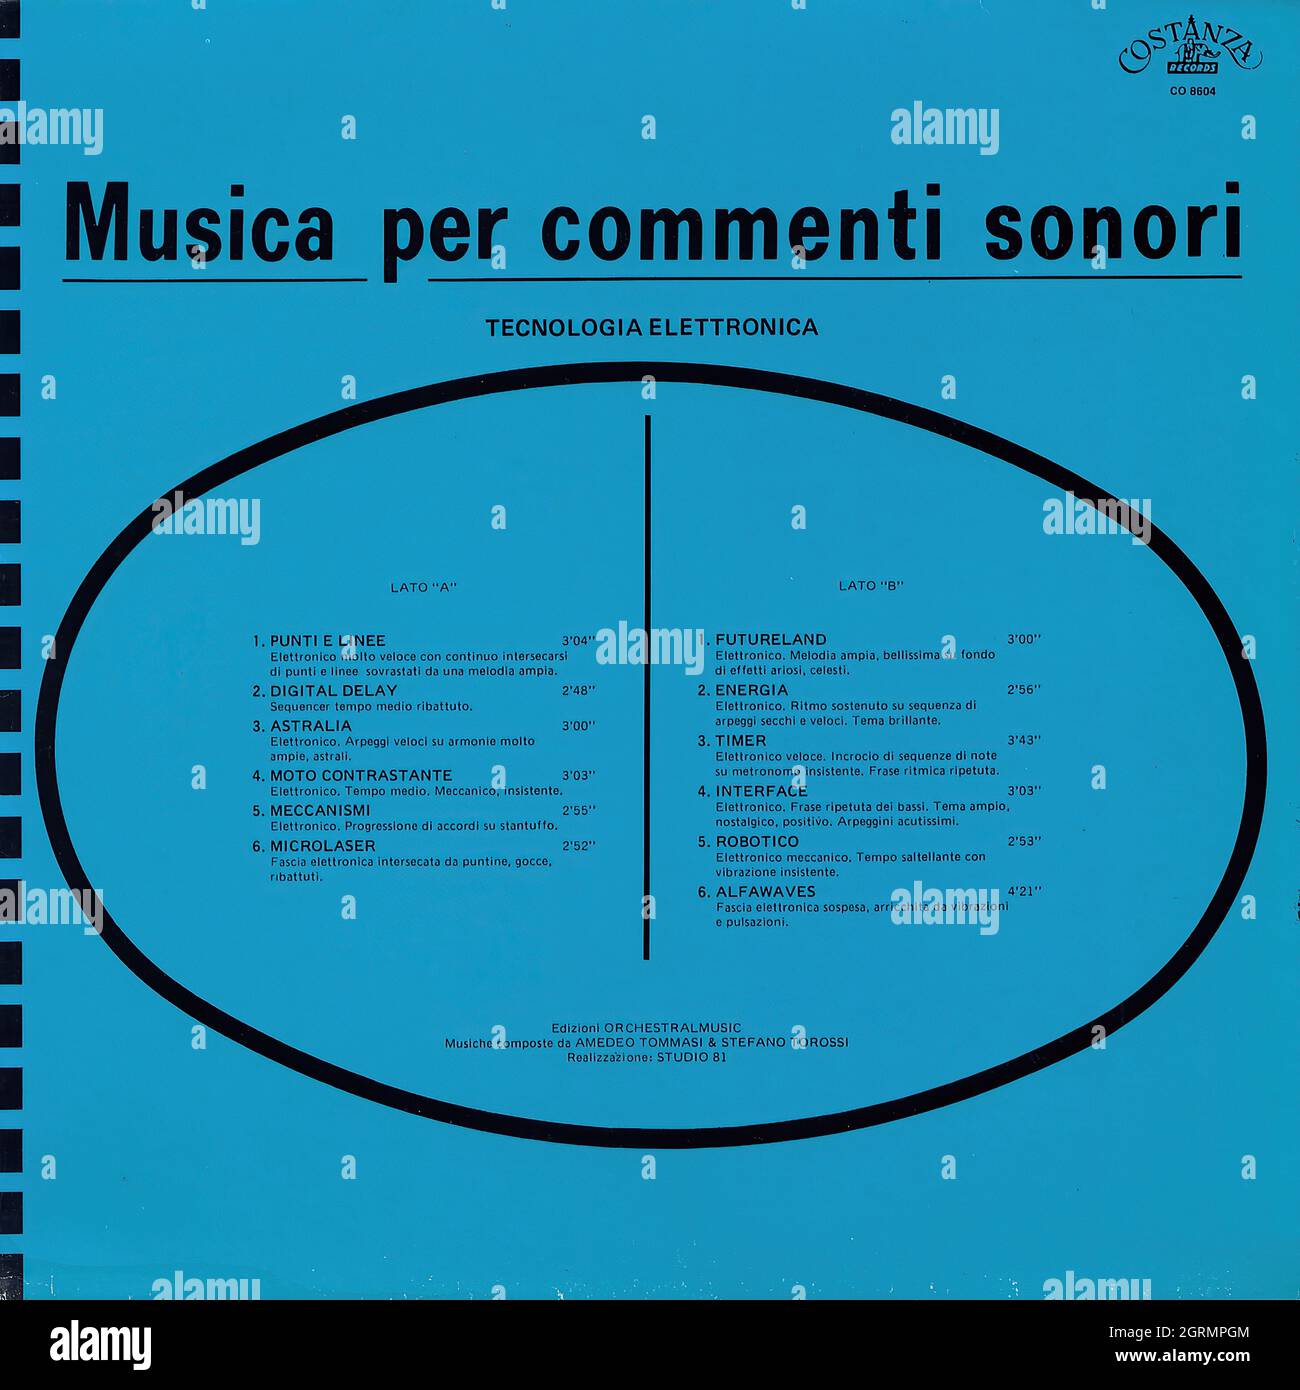 Amadeo Tommasi - Stefano Torossi - Tecnologia elettronica - Vintage Vinyl Record Cover Stock Photo